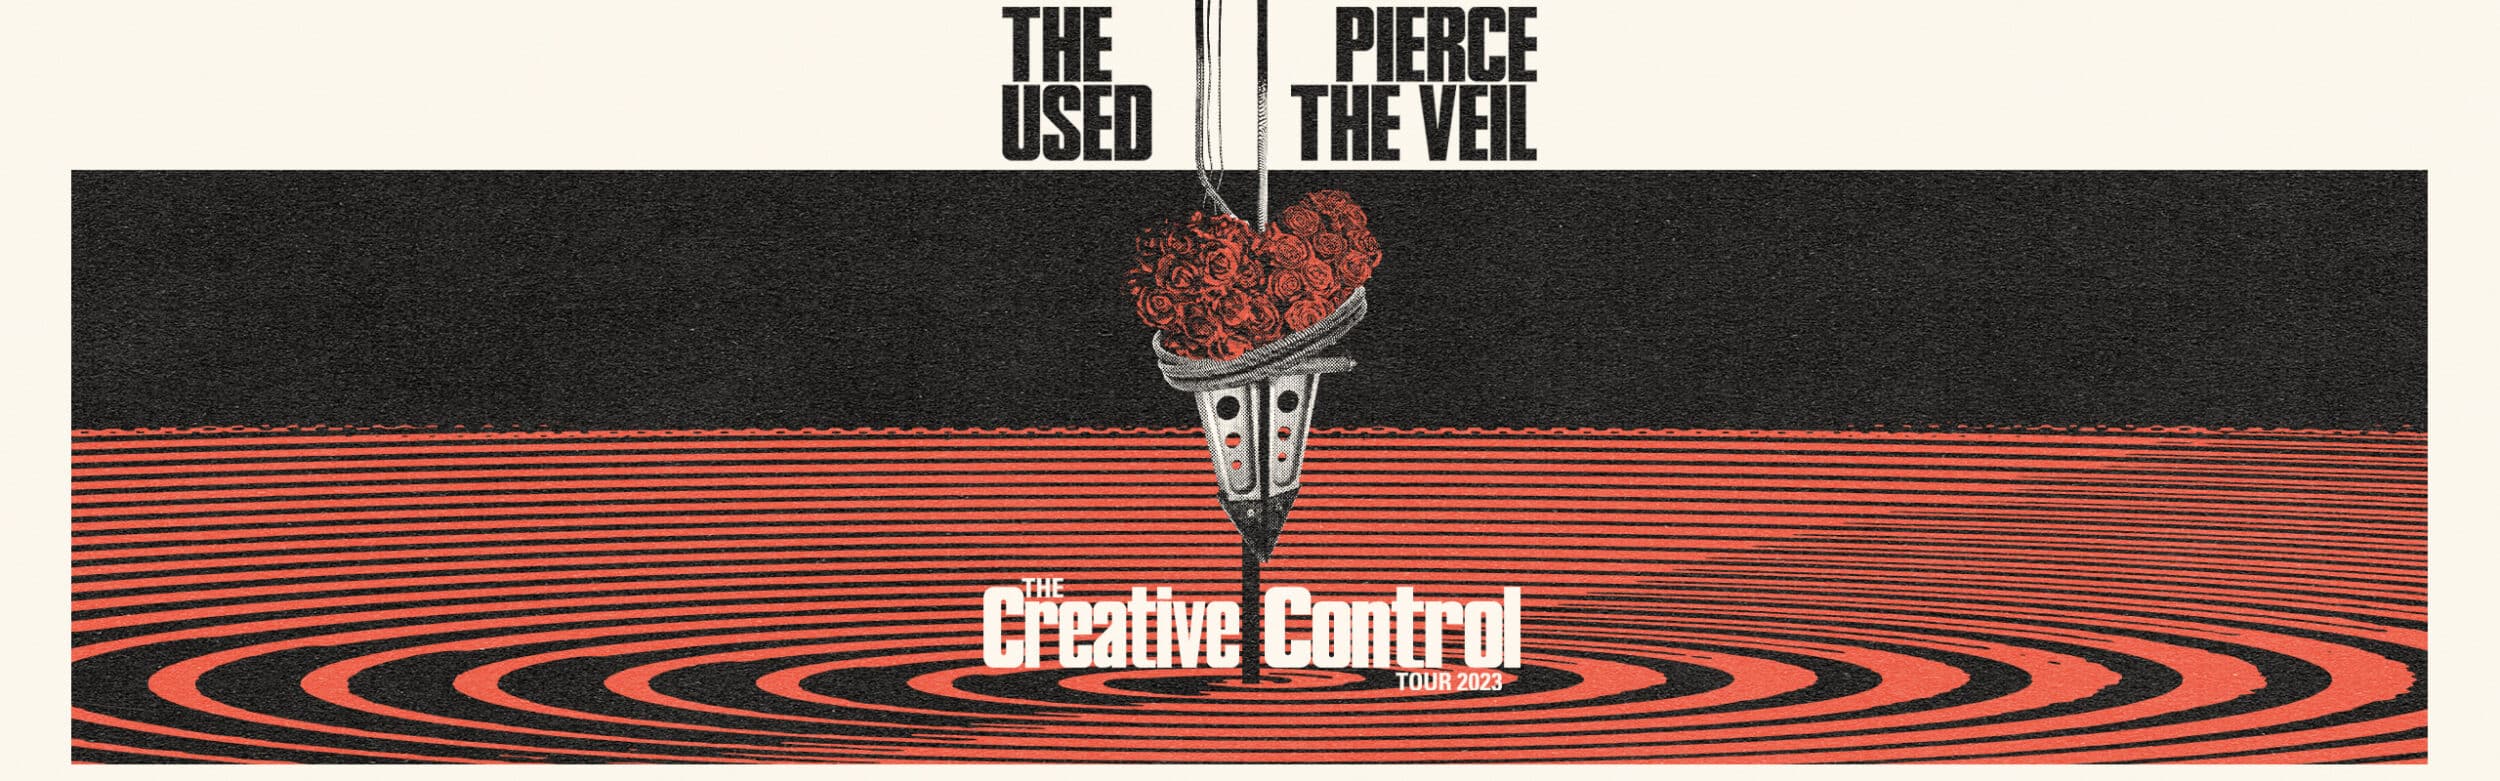 Pierce The Veil & The Used: Creative Control Tour